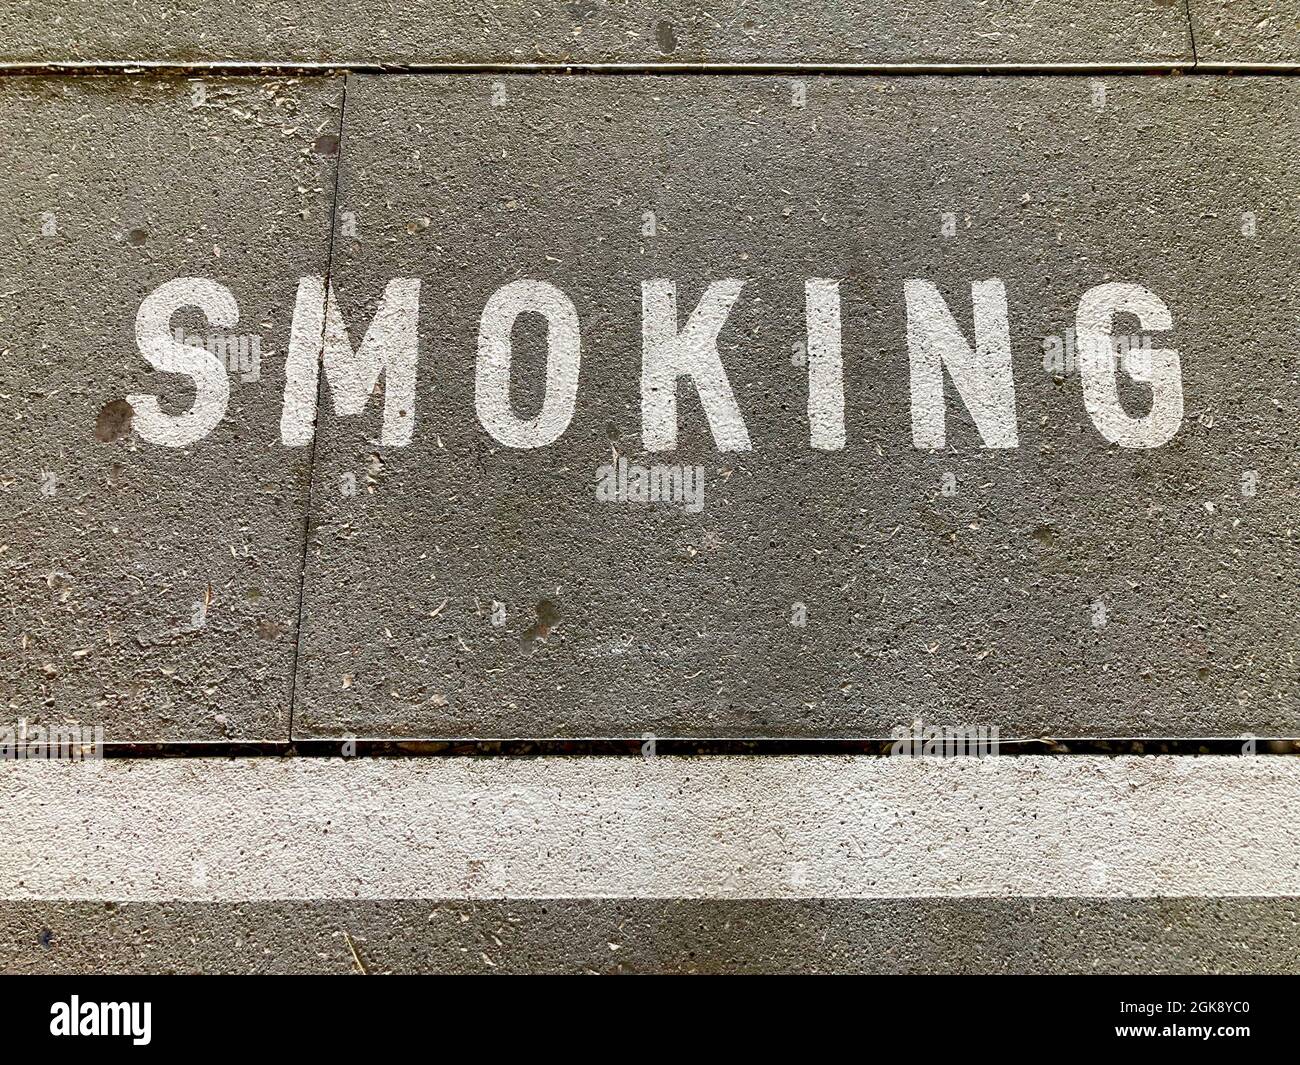 White Smoking inscription on asphalt in Switzerland Stock Photo